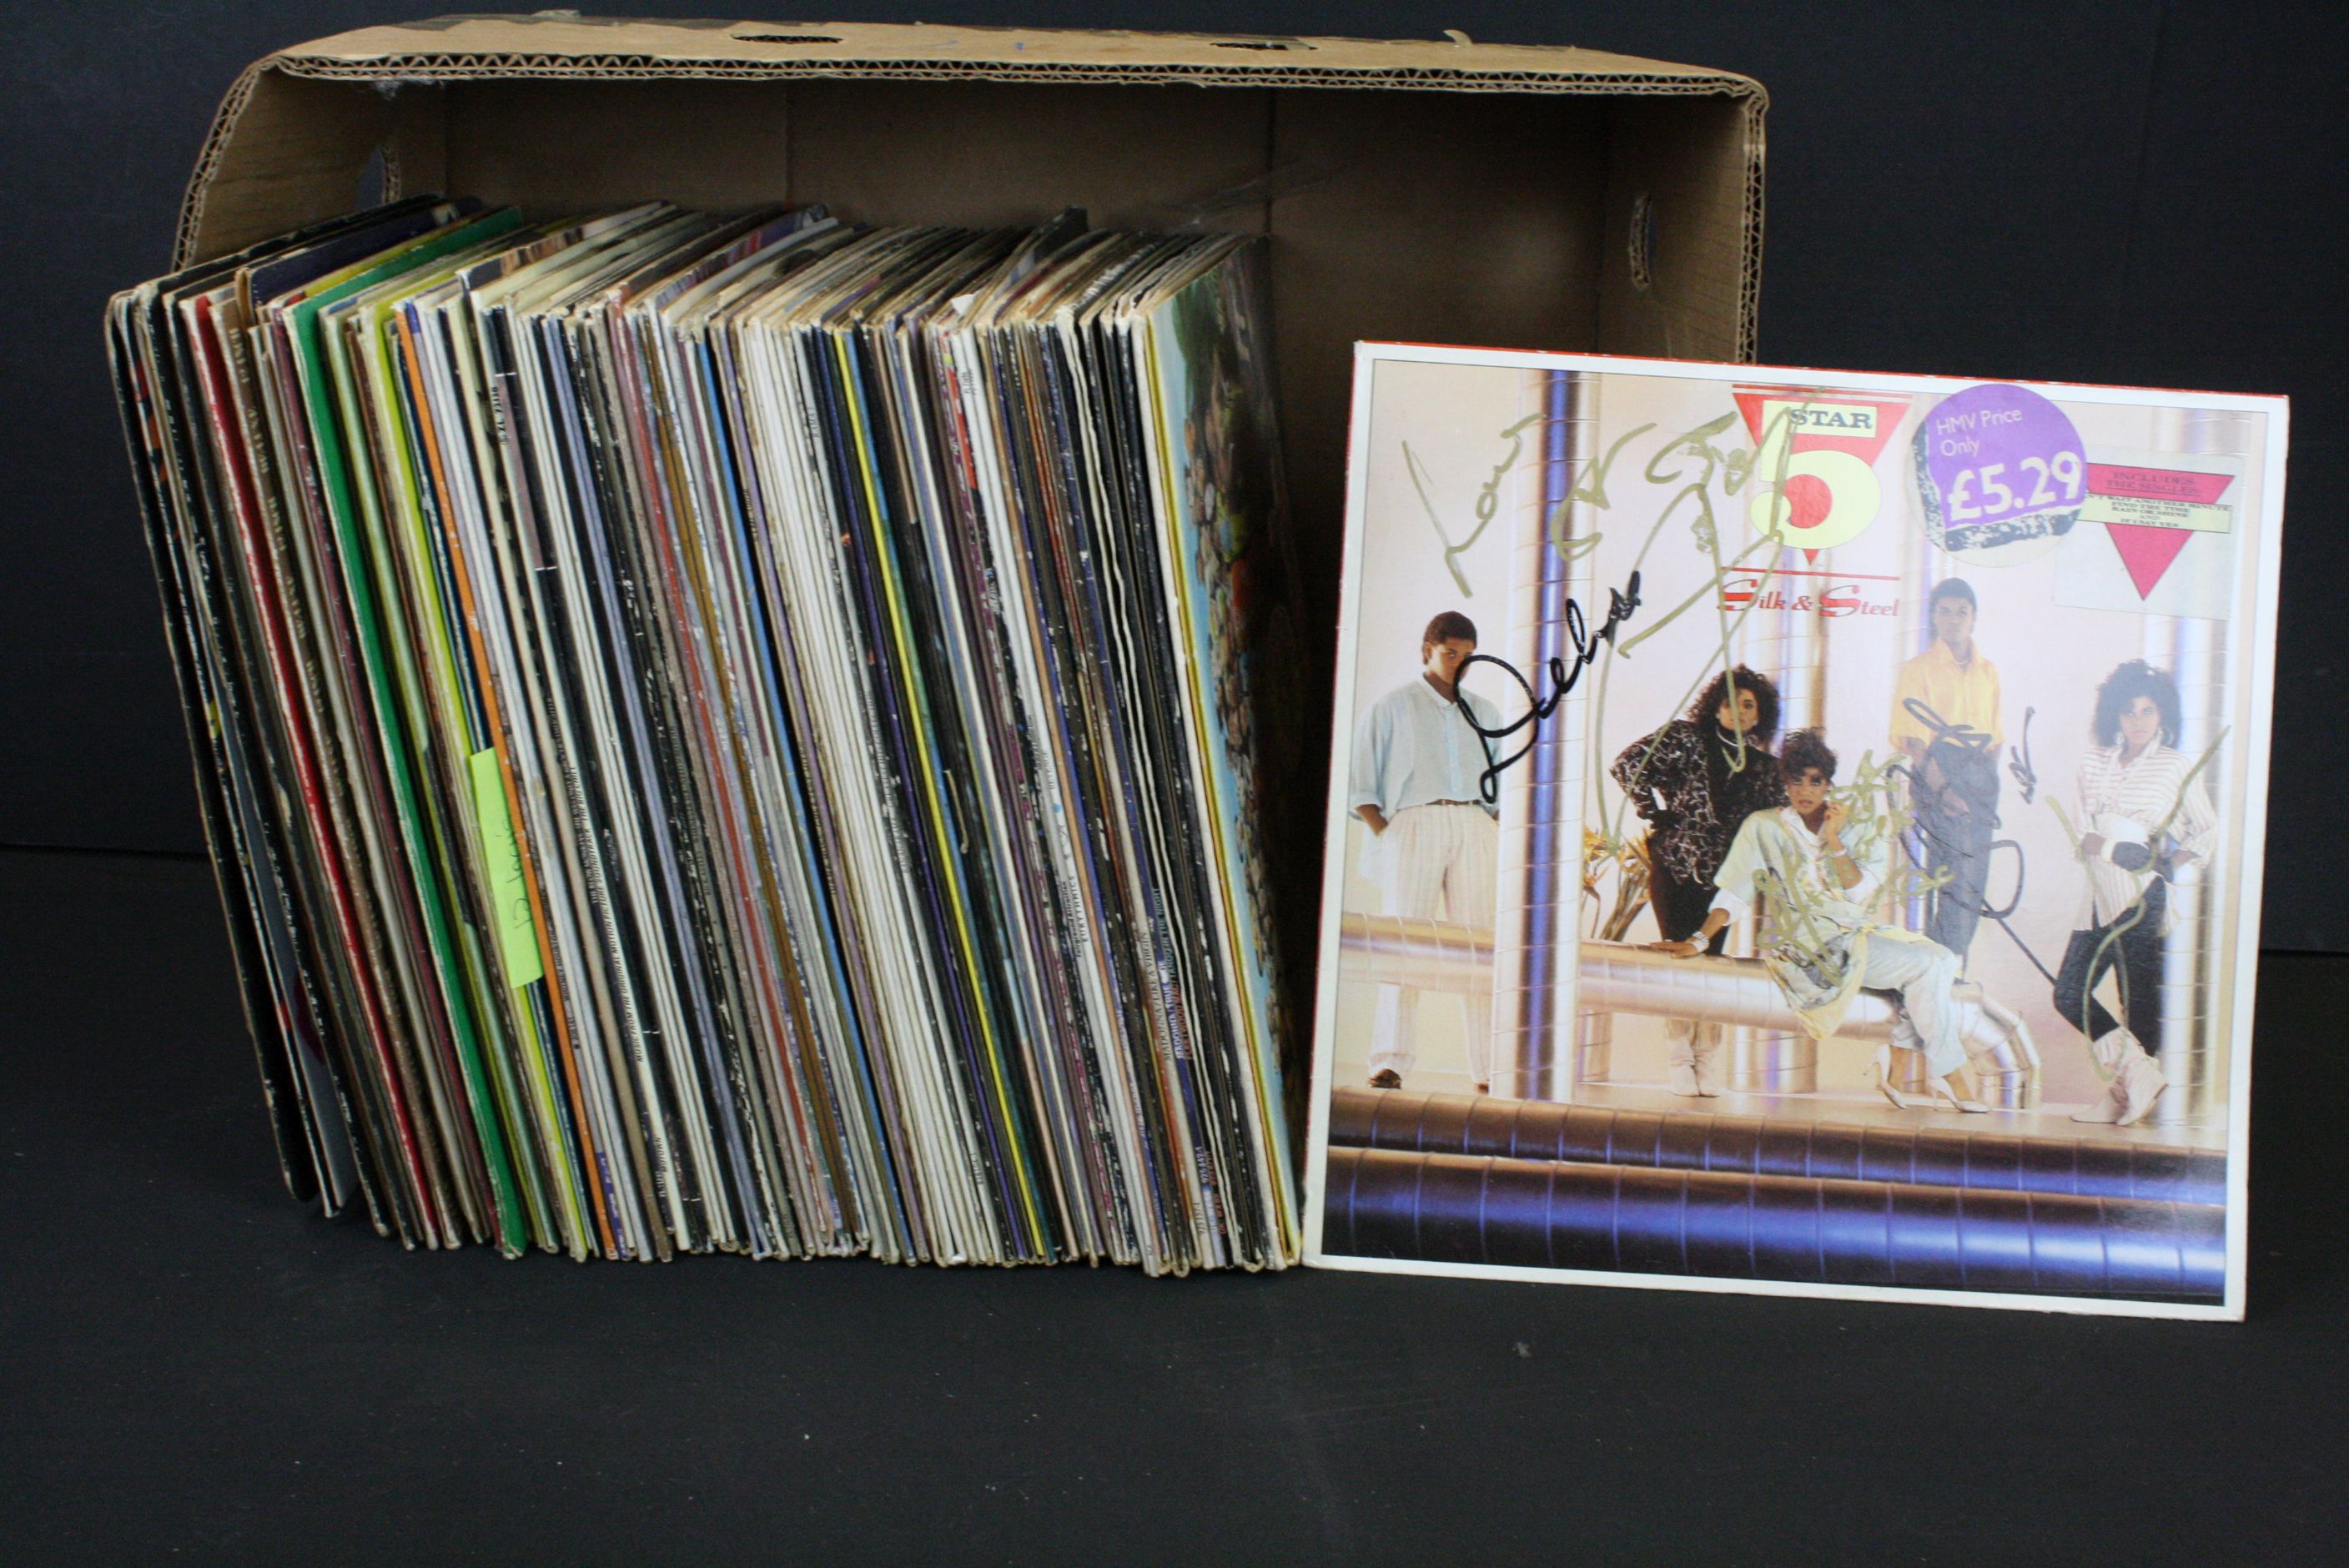 Vinyl - Over 100 Rock & Pop LPs and 12" singles including The Beatles, The Eagles, Fleetwood Mac,